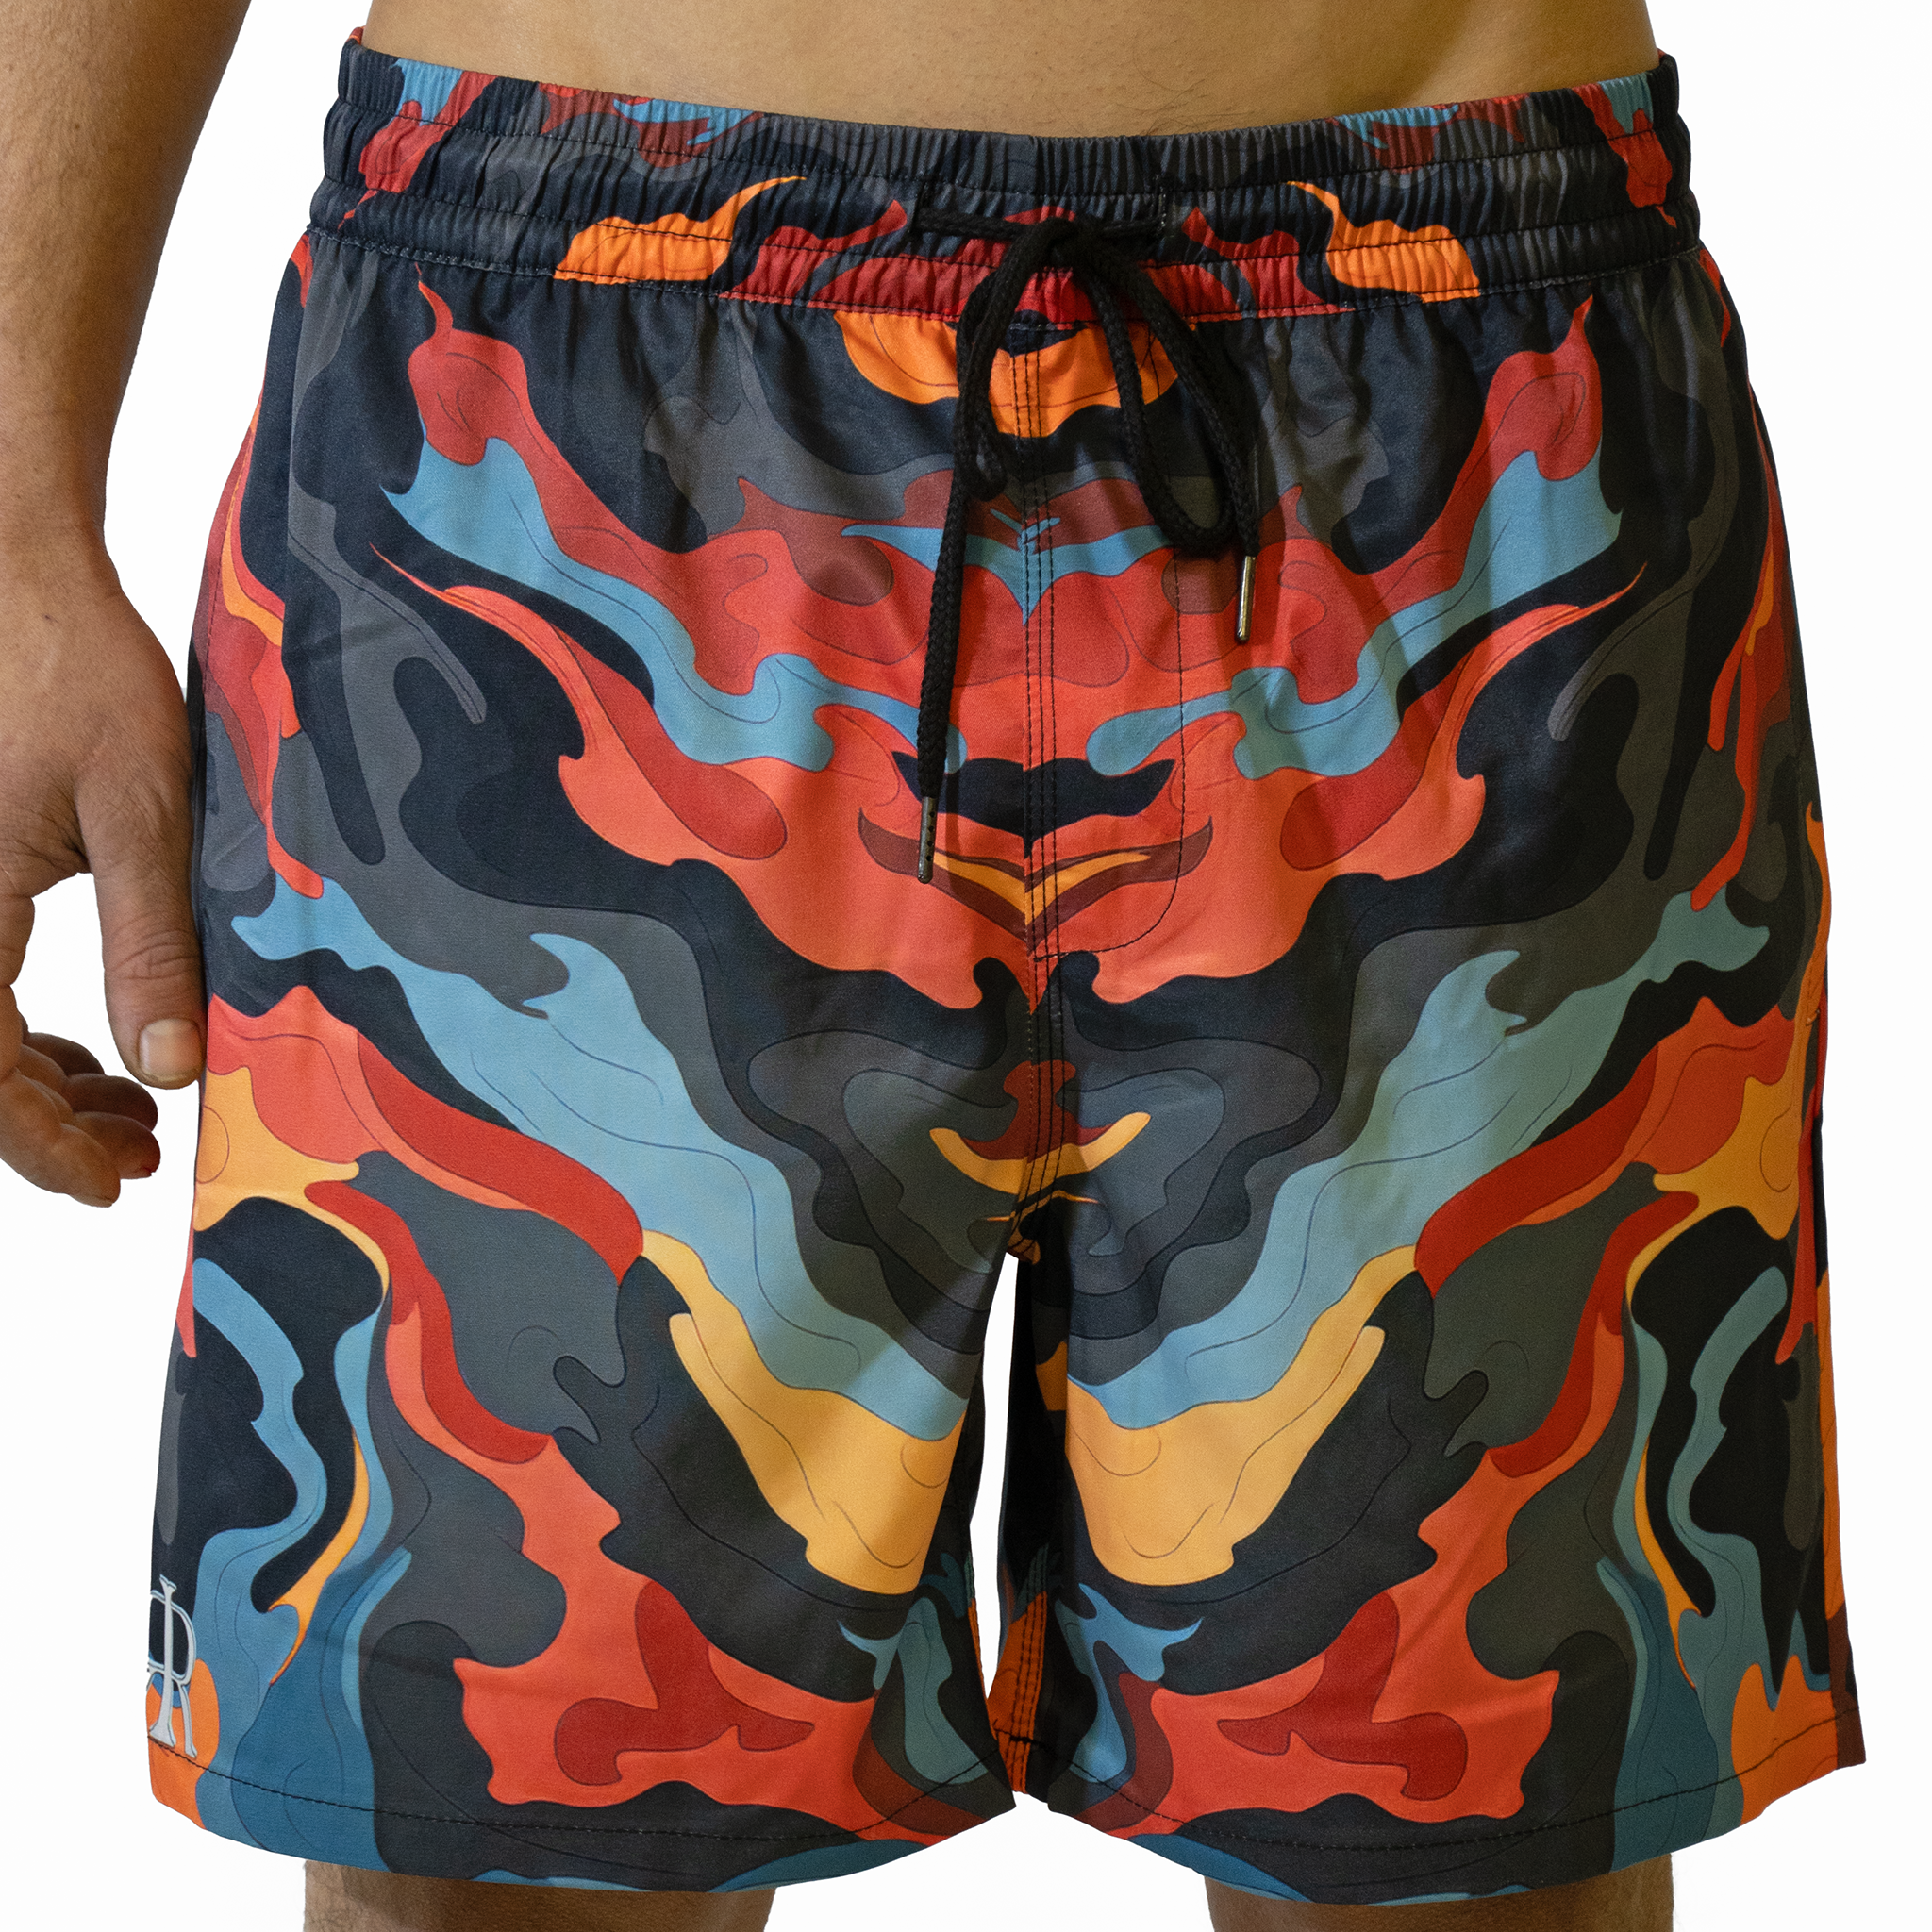 Swim Shorts: Fireface Fusion